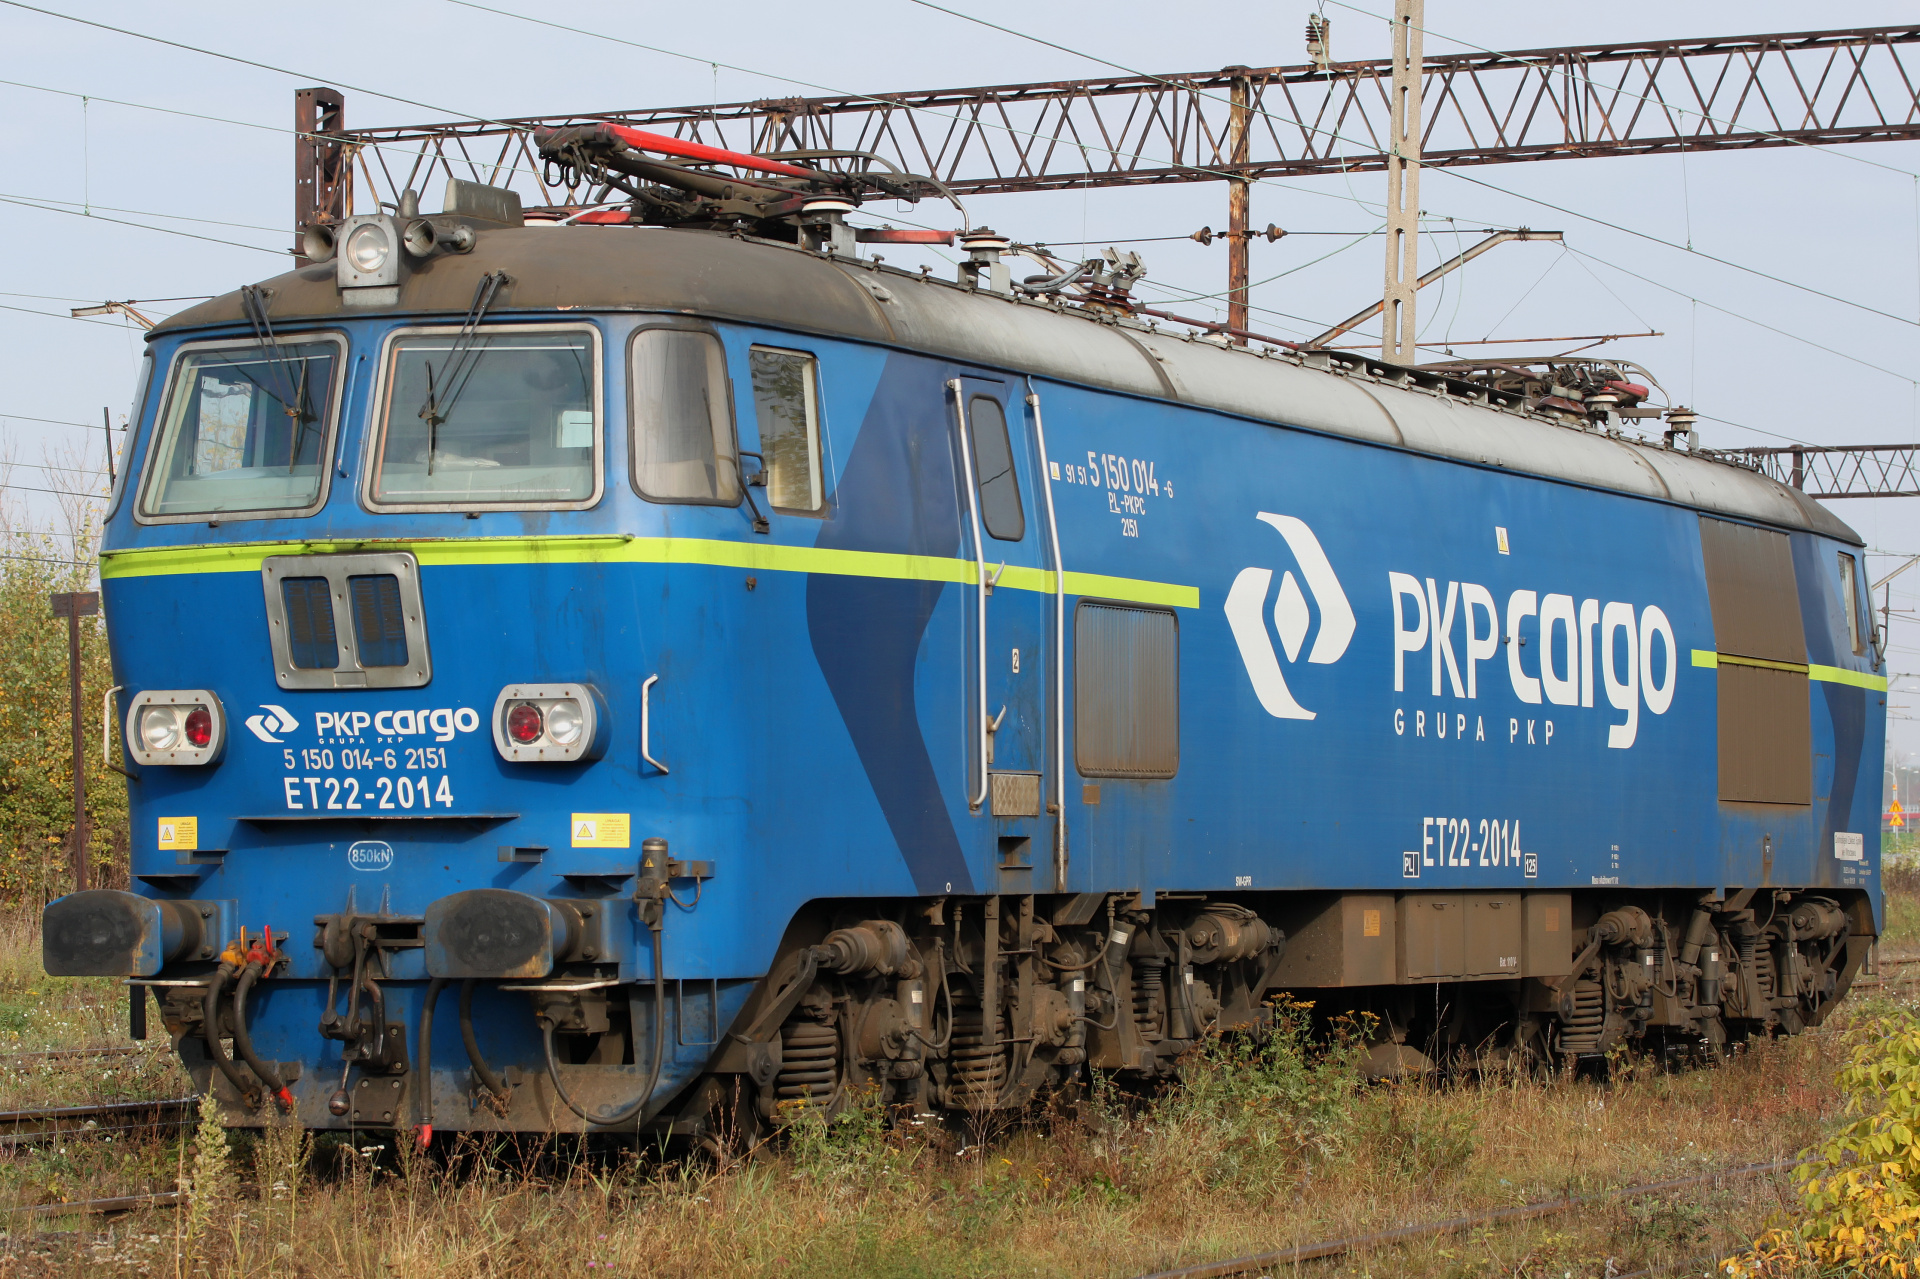 ET22-2014 (Vehicles » Trains and Locomotives » Pafawag 201E)